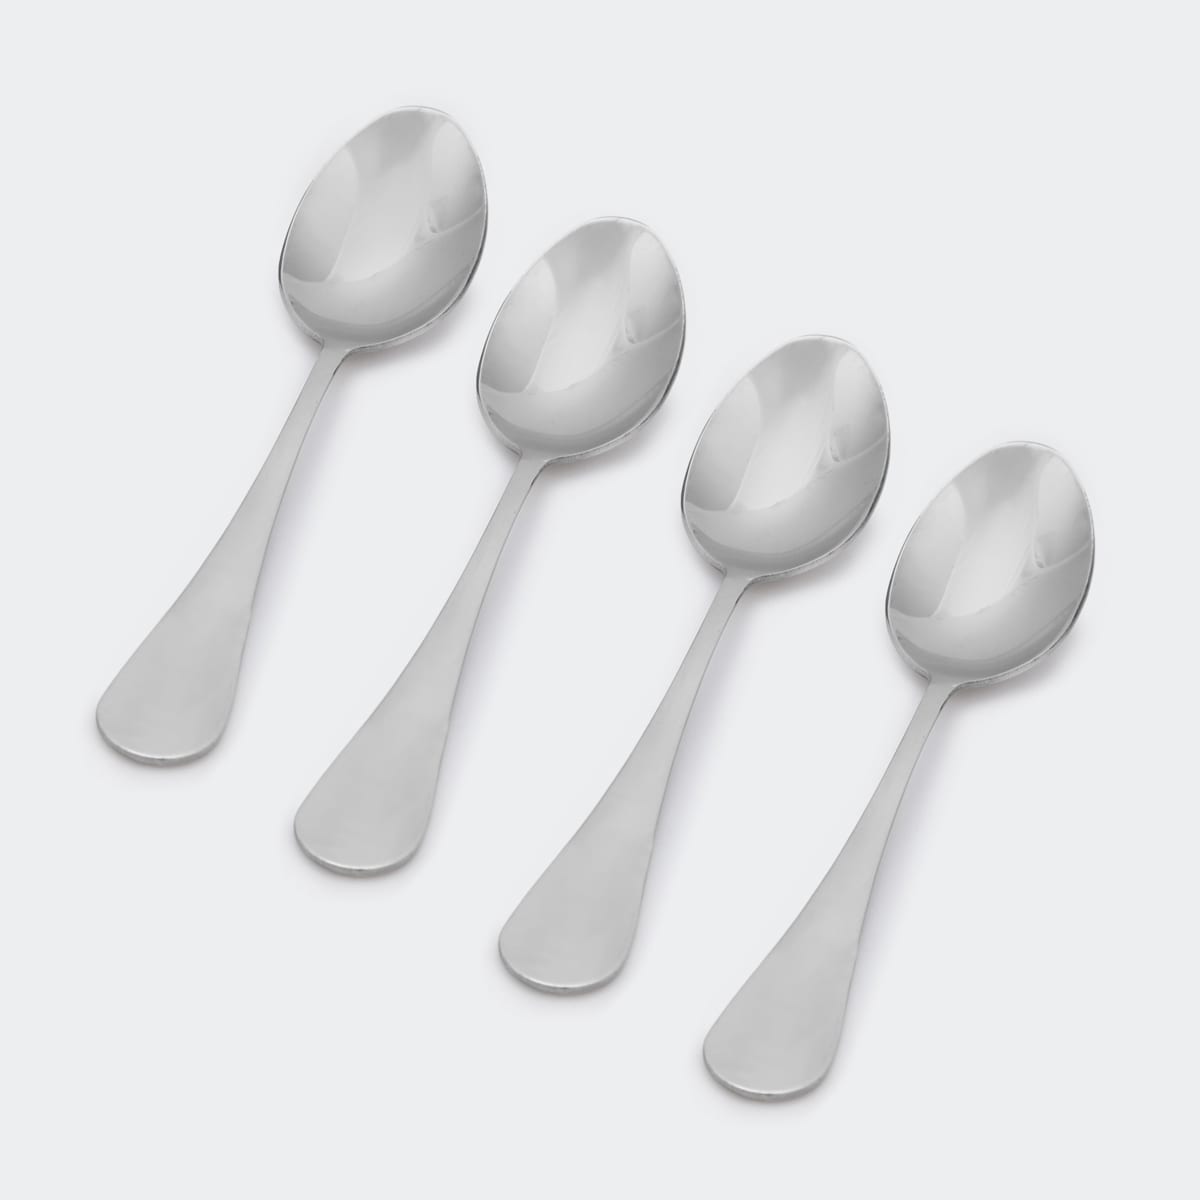 Stainless Steel Gelato/Ice Cream Spoon Fruit Spoon Set of 6 Nirosta Yogurt Spoon Dessert Spoon 6.4-inch 